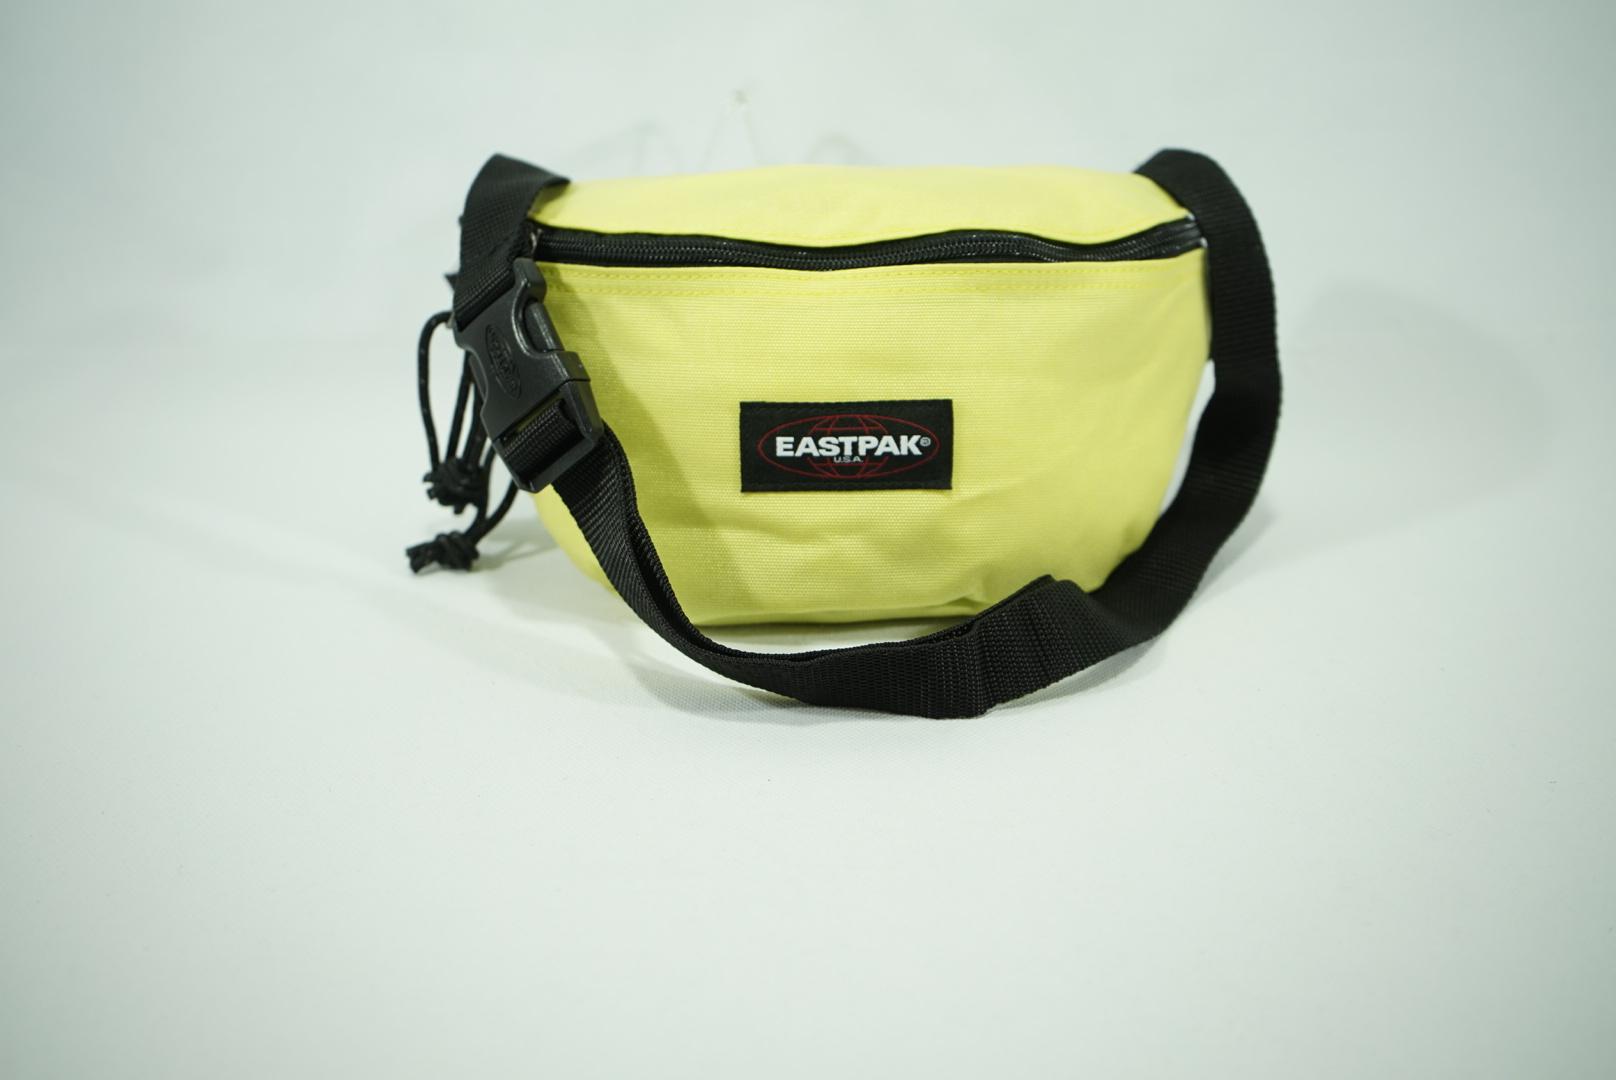 Comprar Riñonera Eastpak springer yellow K074 86Z online